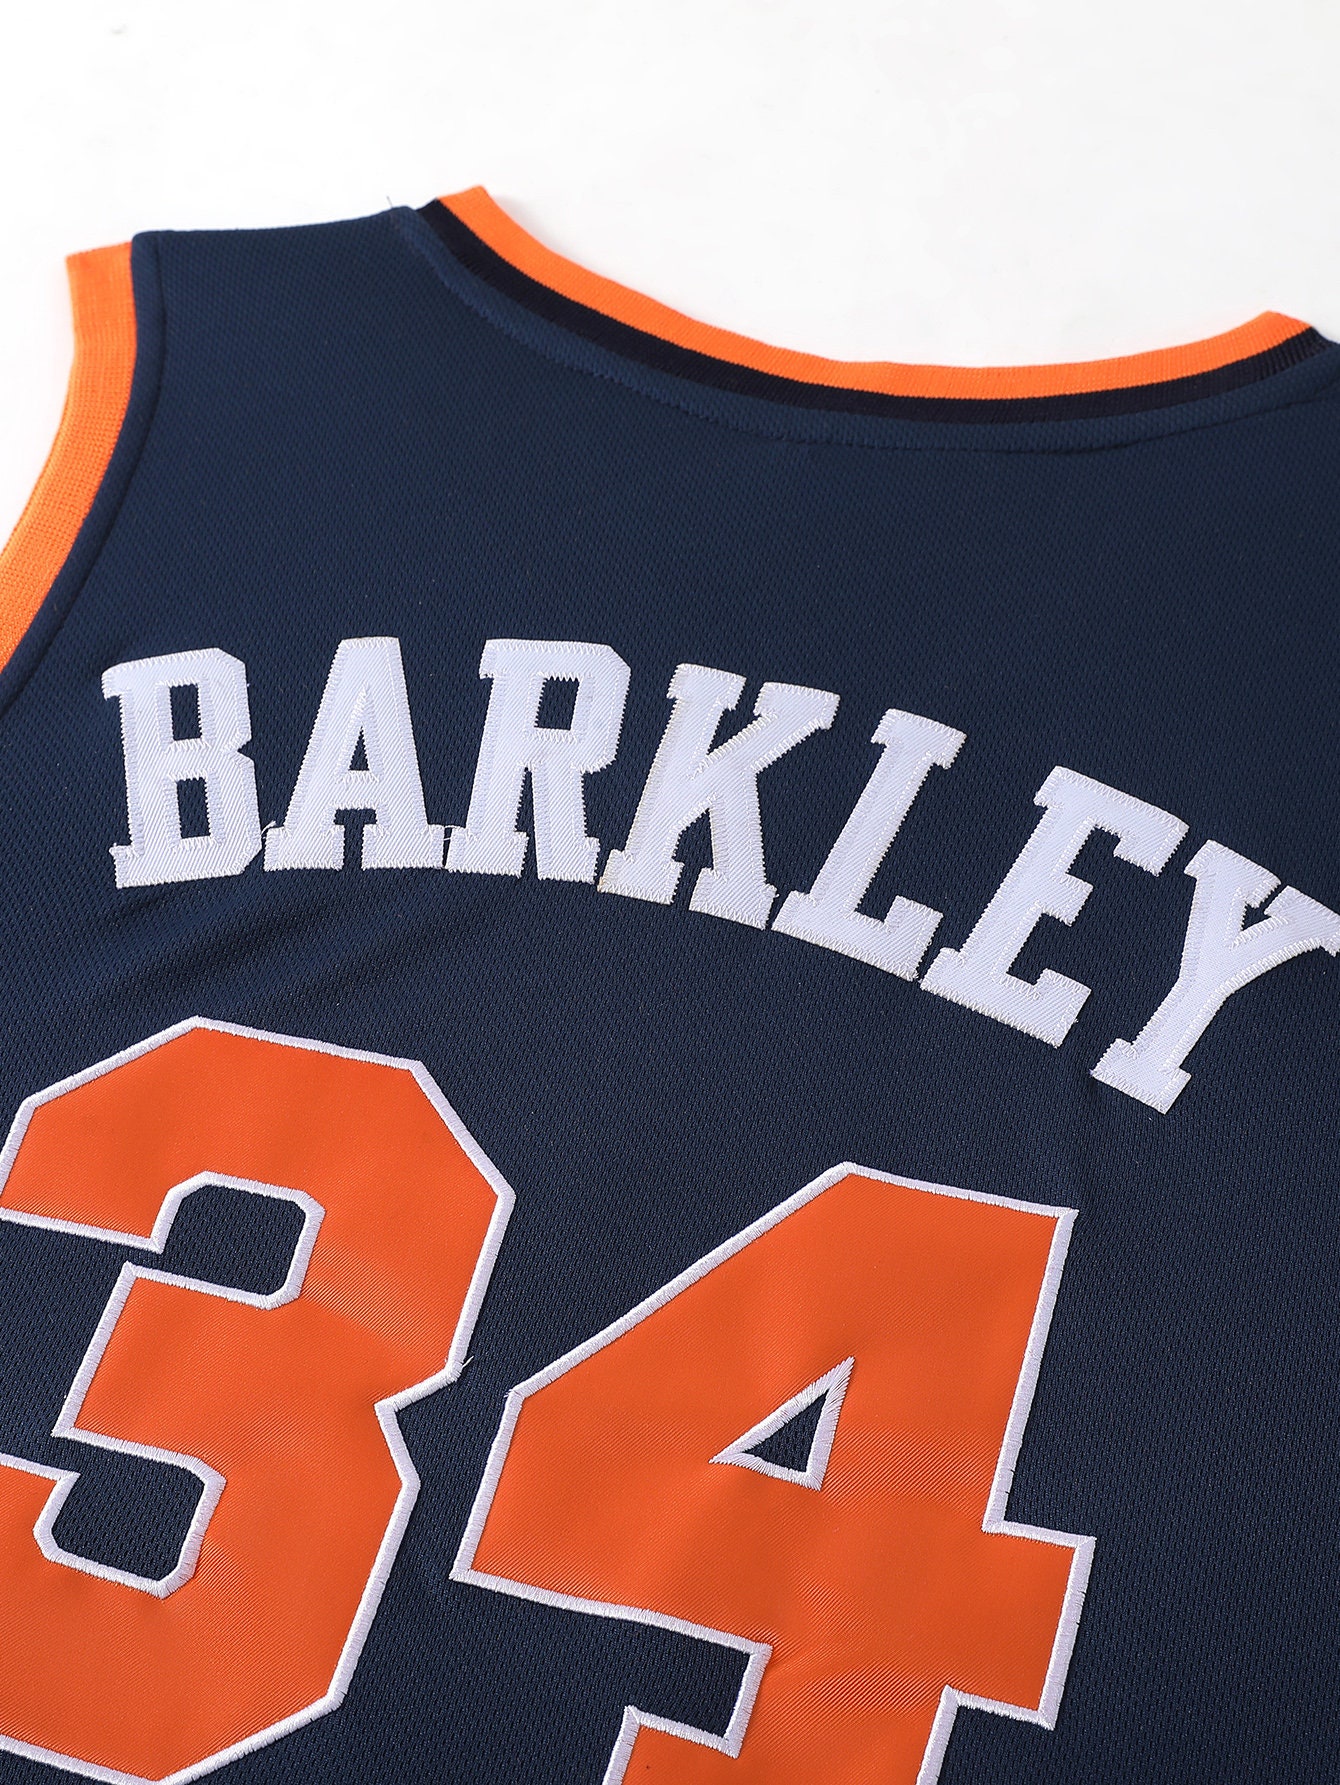 Charles Barkley Auburn Basketball Jersey College